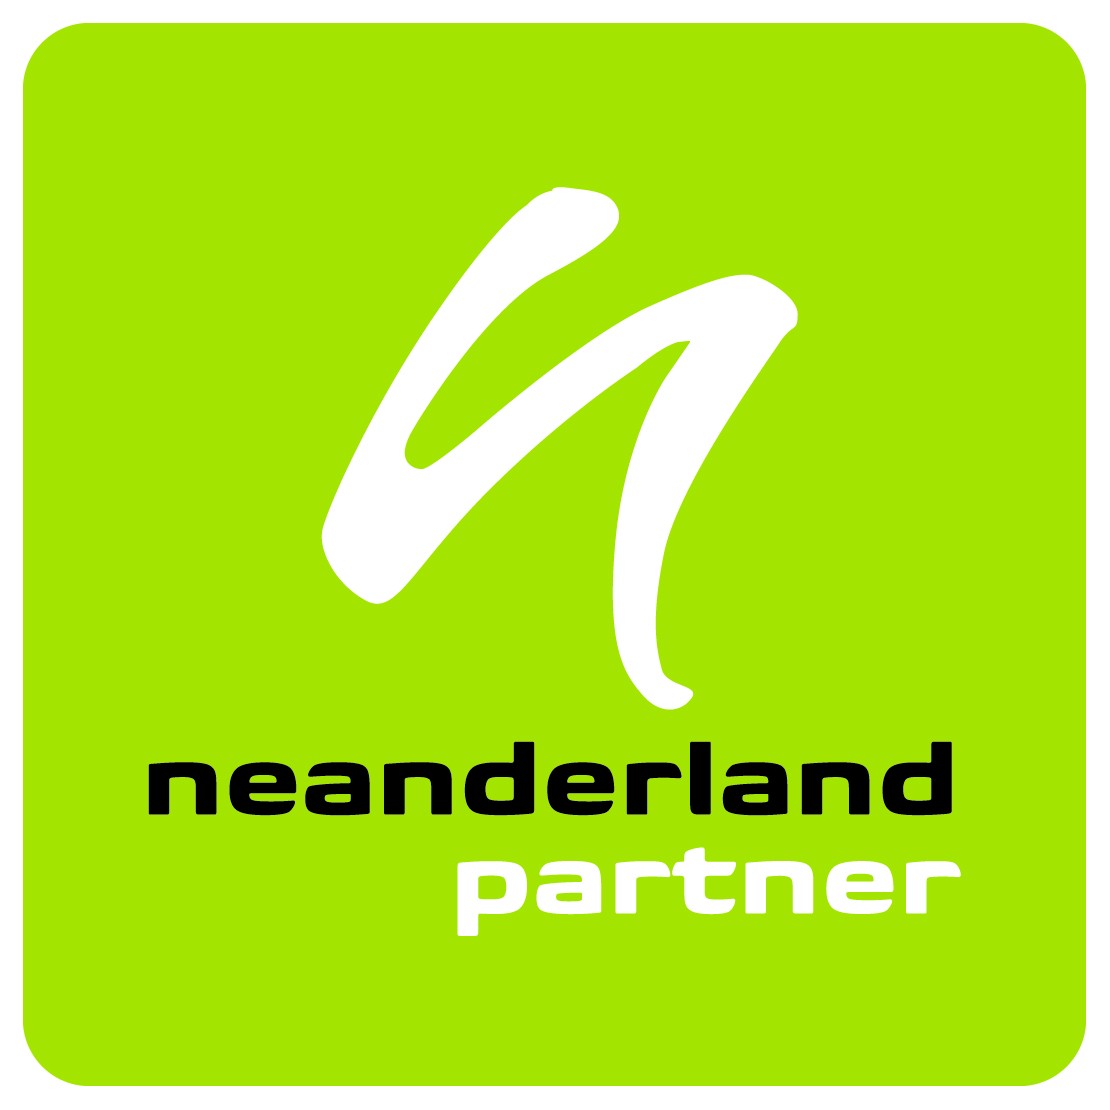 neanderland partner